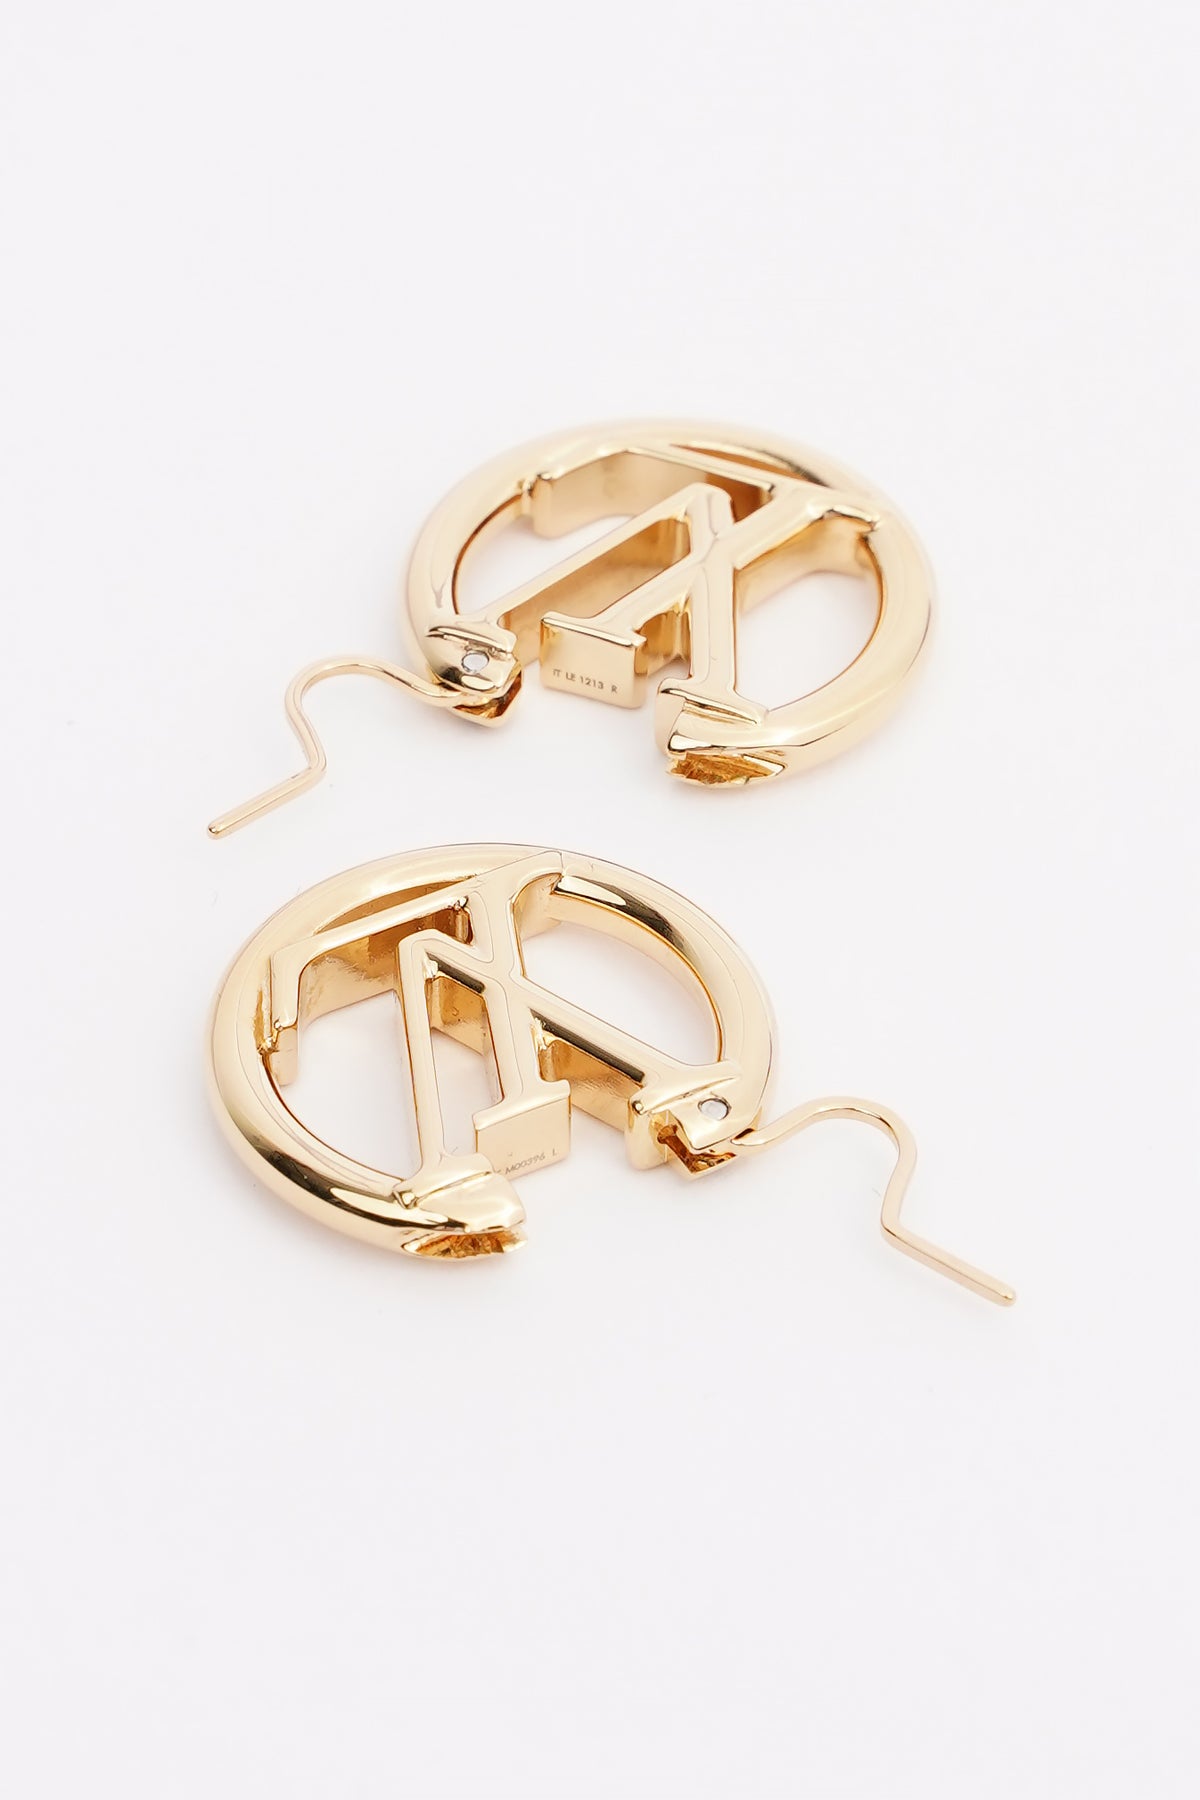 Louis Vuitton - ICONIC - LOGO Louise Hoop Earrings - Gold